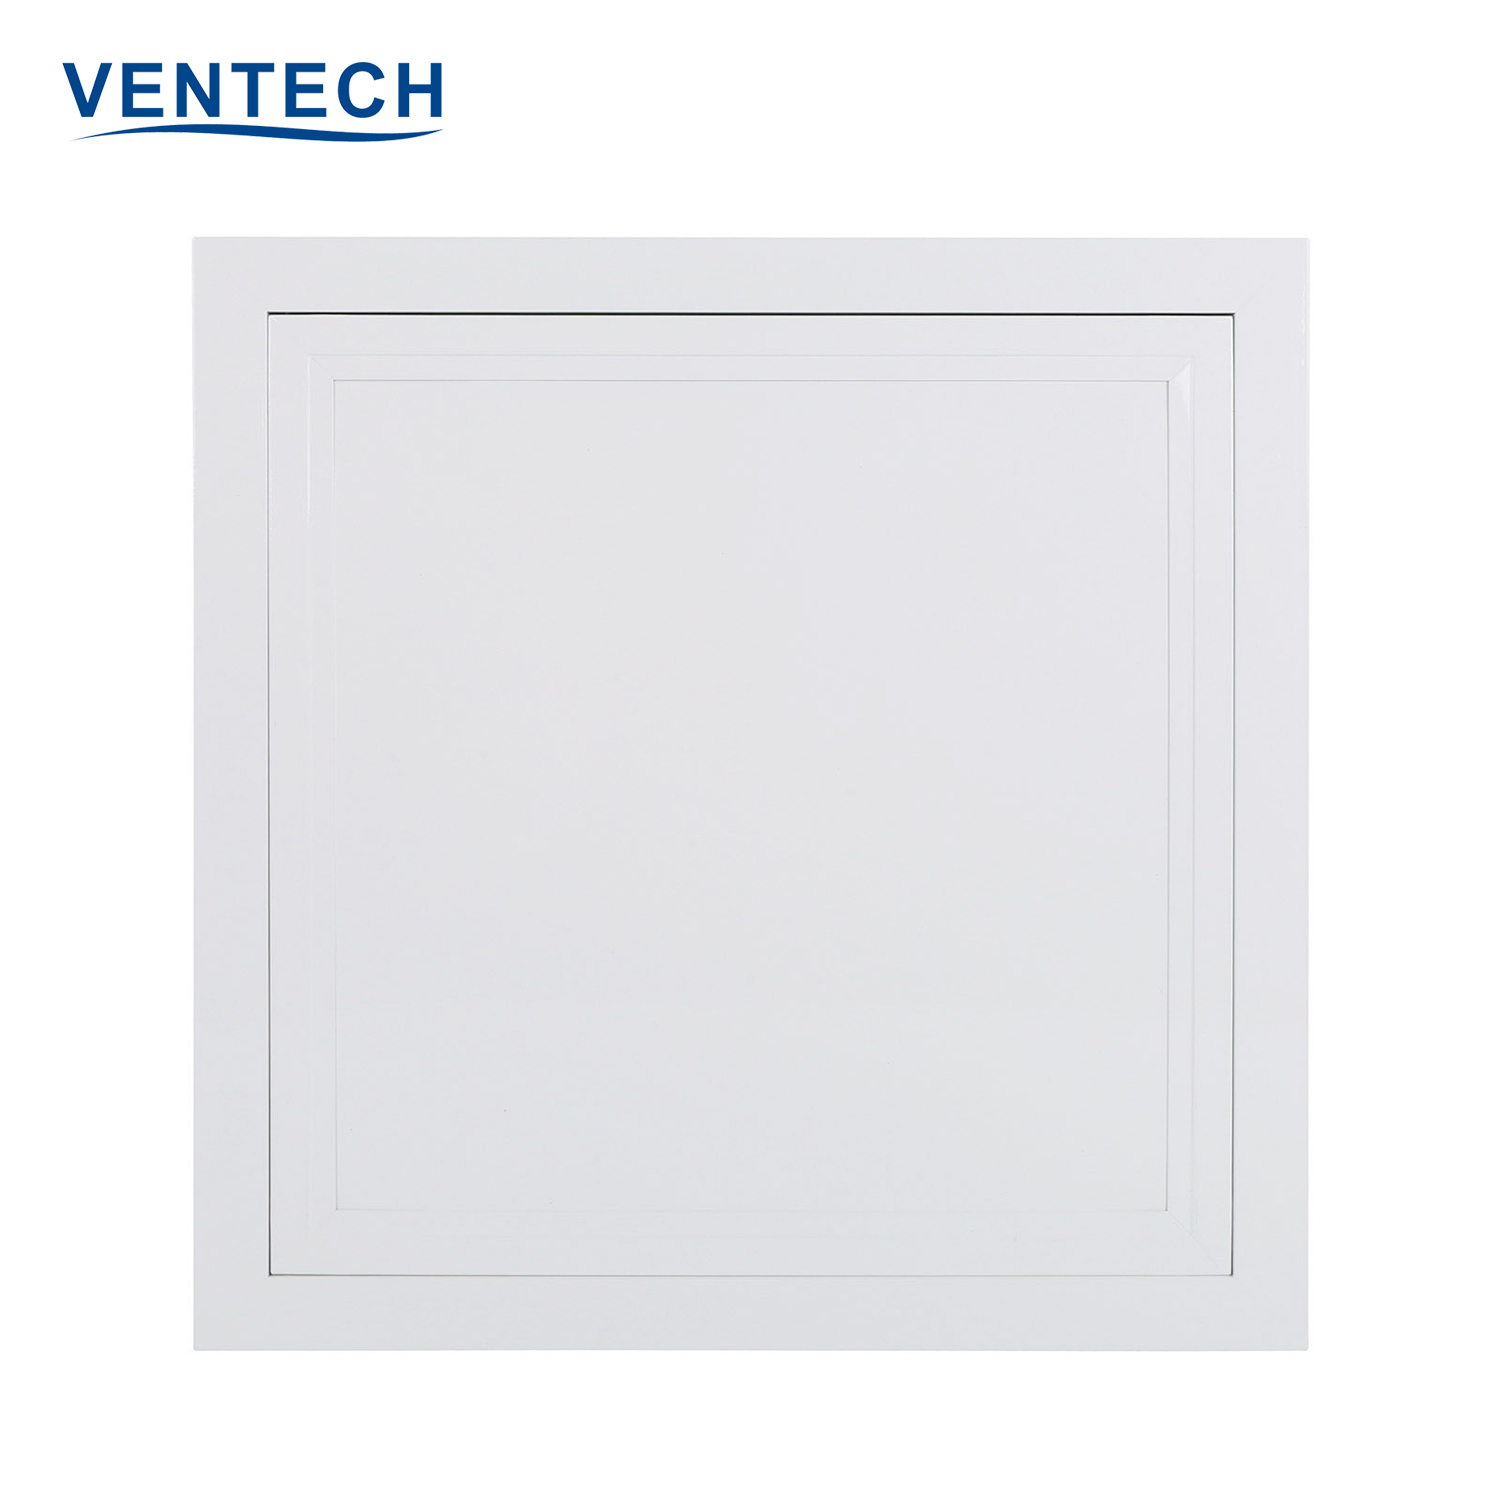 Ventech access door panel wholesale for large public areas-1